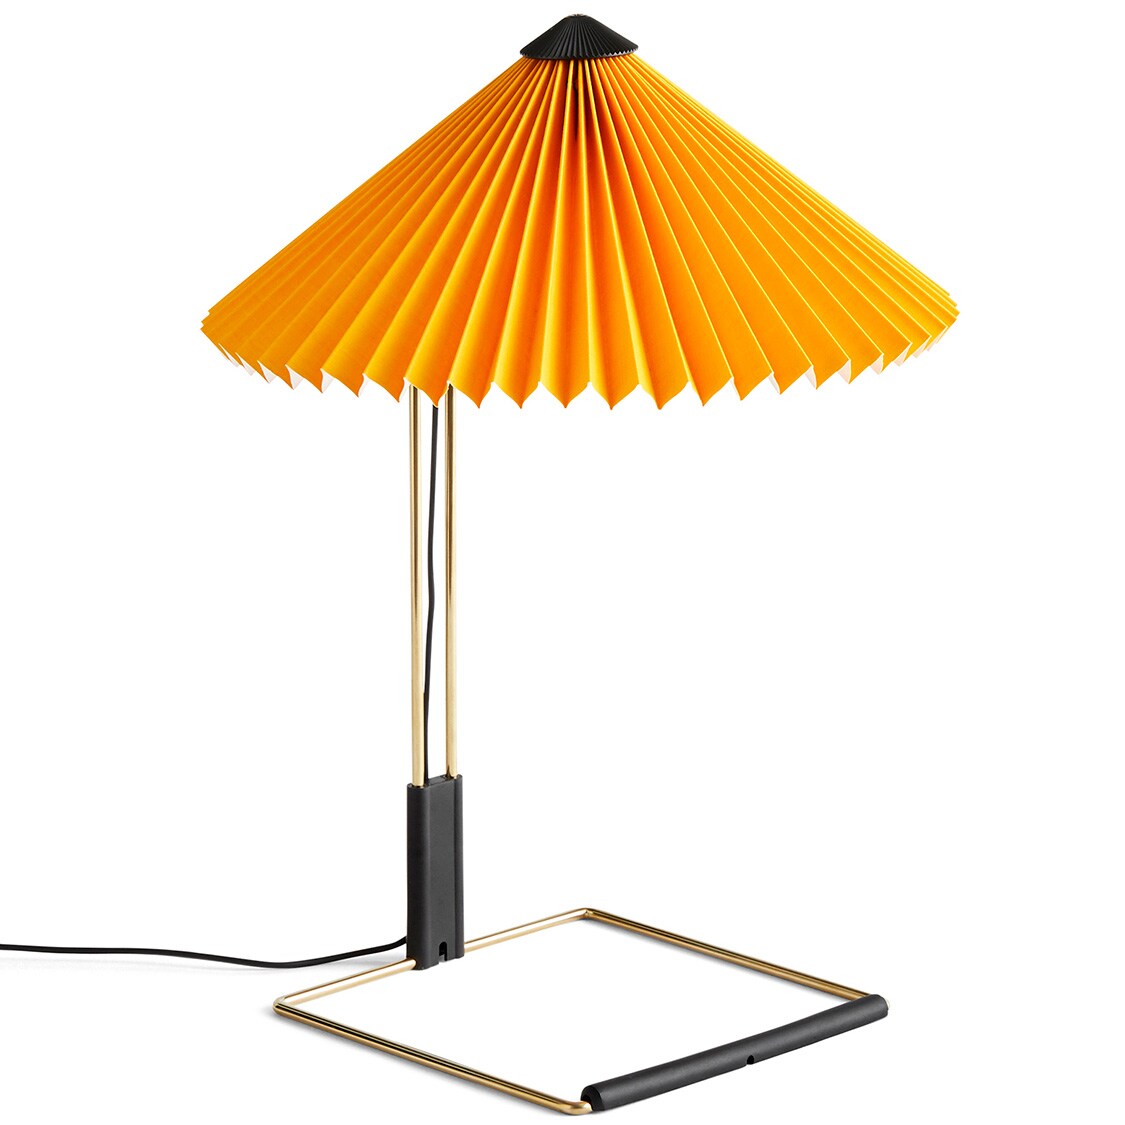 Matin Table Lamp 300 mm, Polished Brass / Bright Yellow - HAY @ RoyalDesign.co.uk